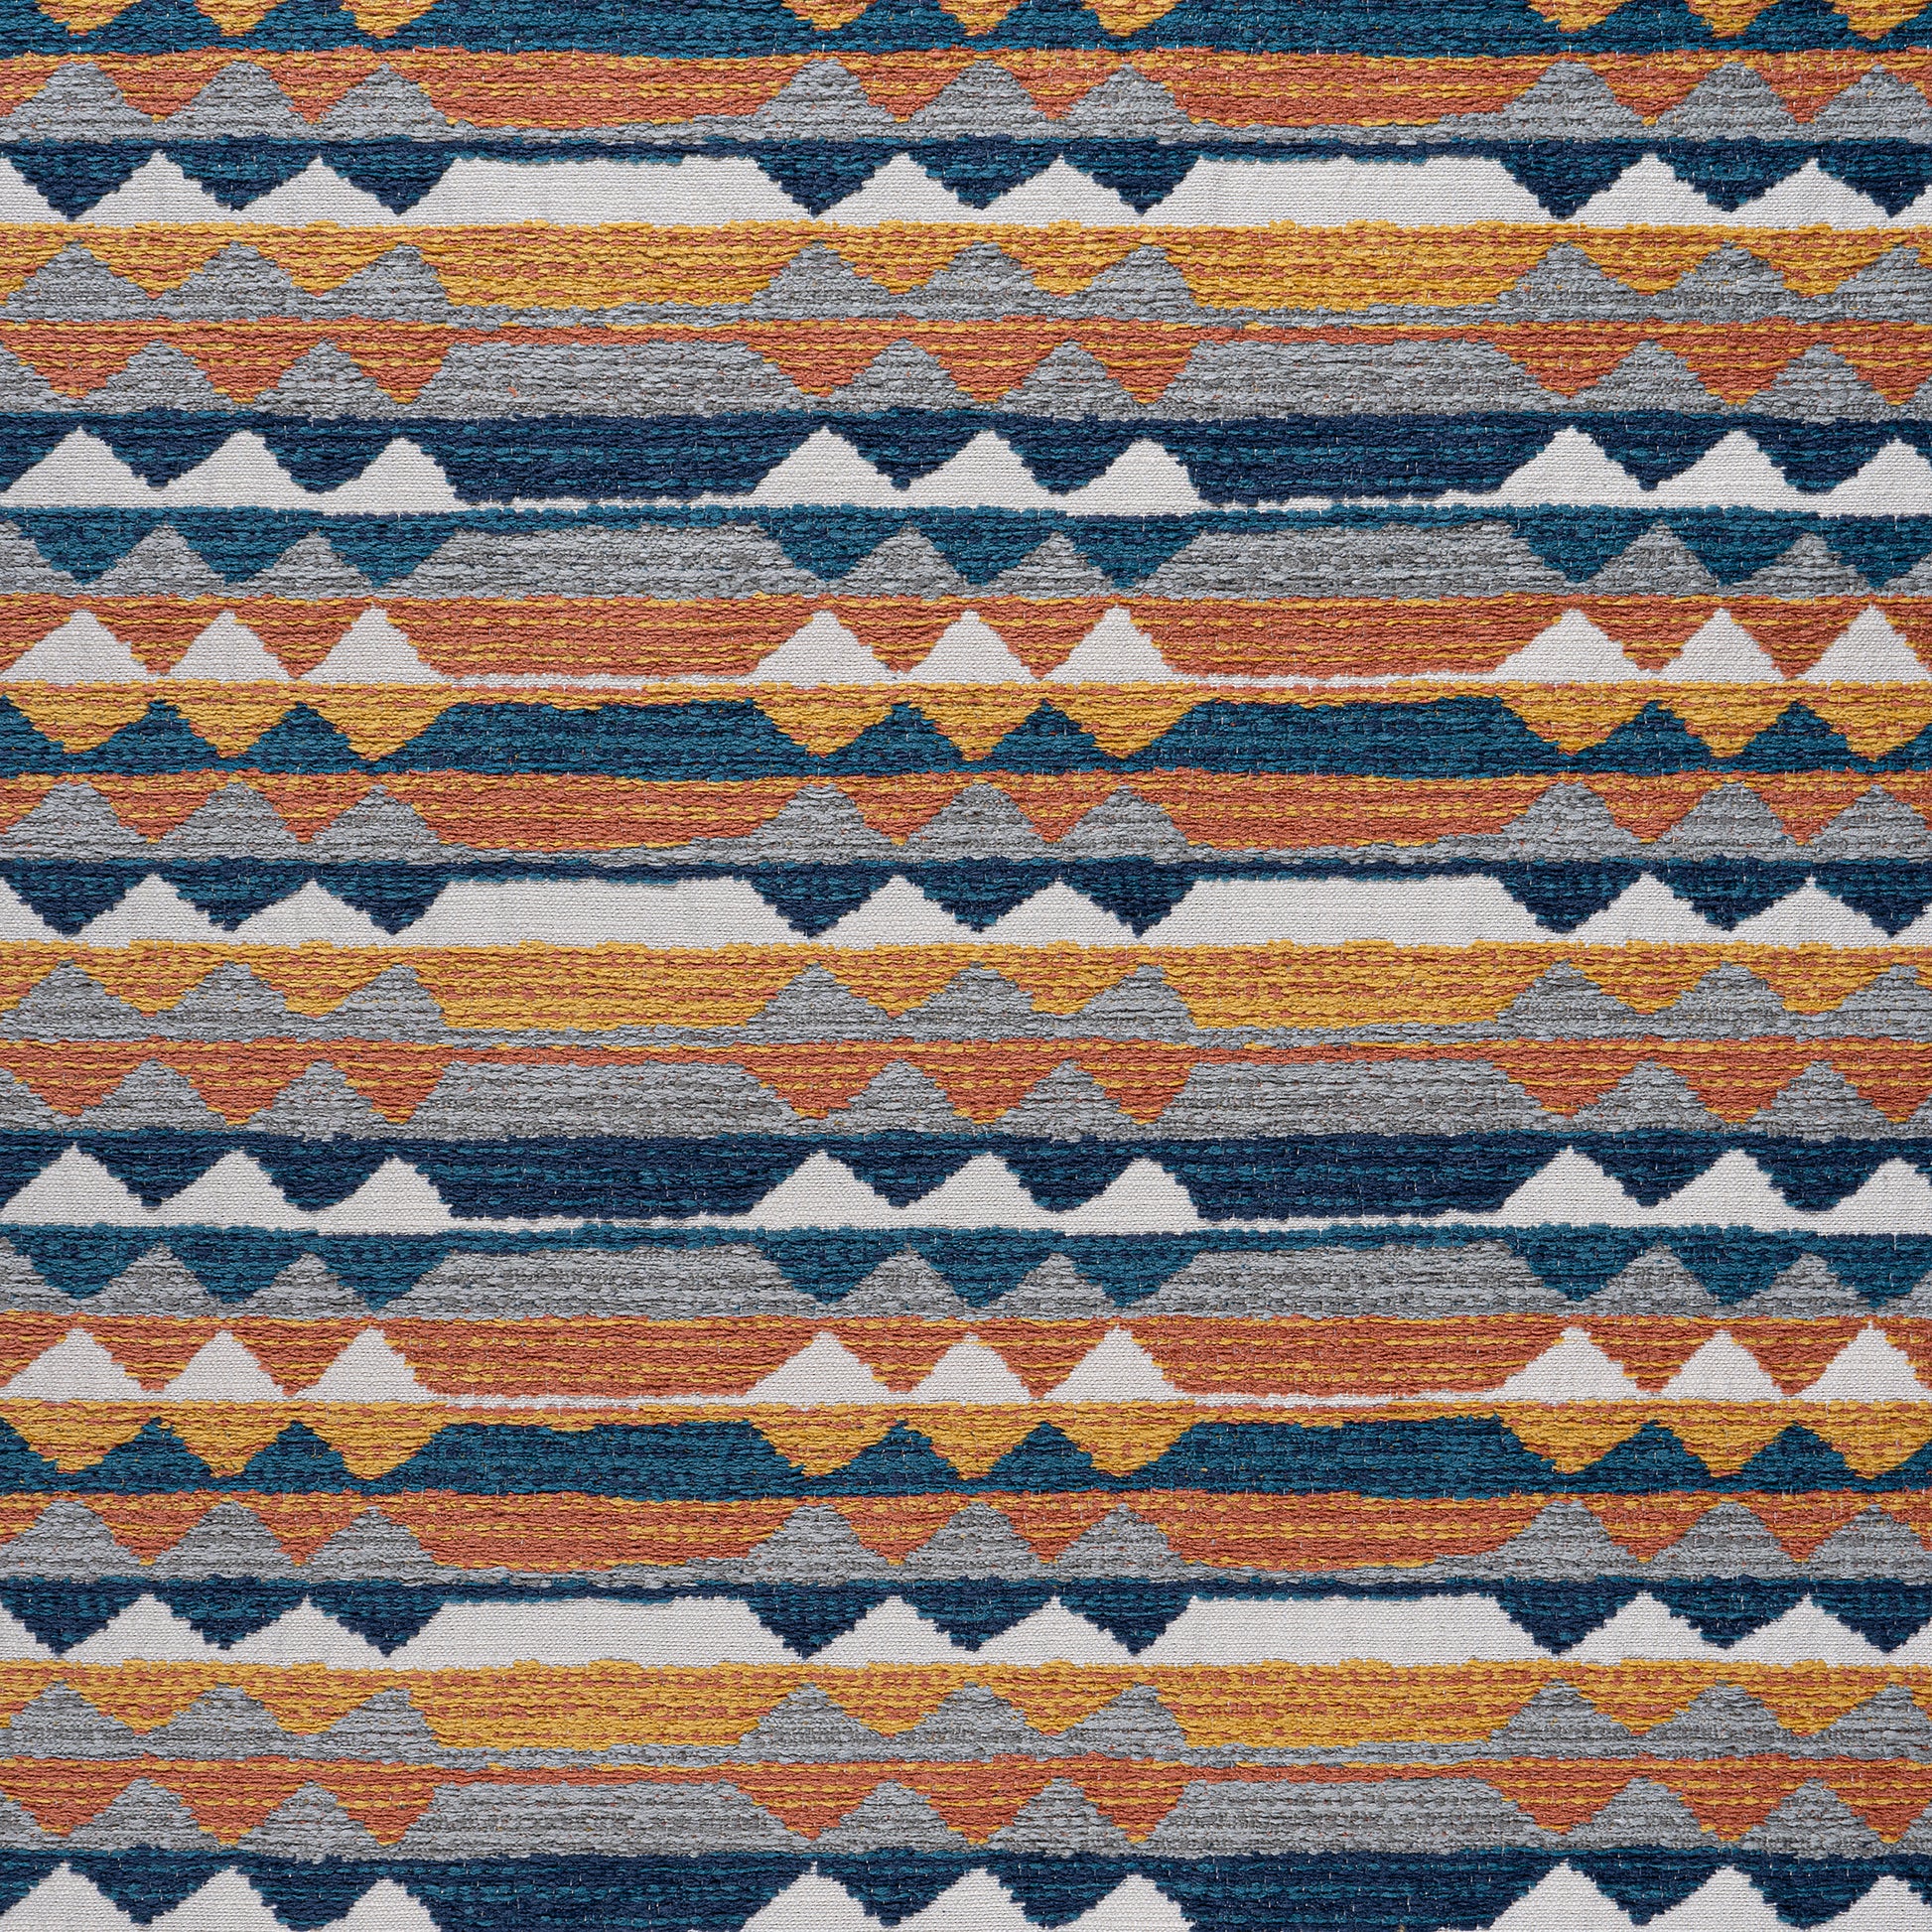 Purchase Thibaut Fabric Pattern W78377 pattern name Saranac color Canyon